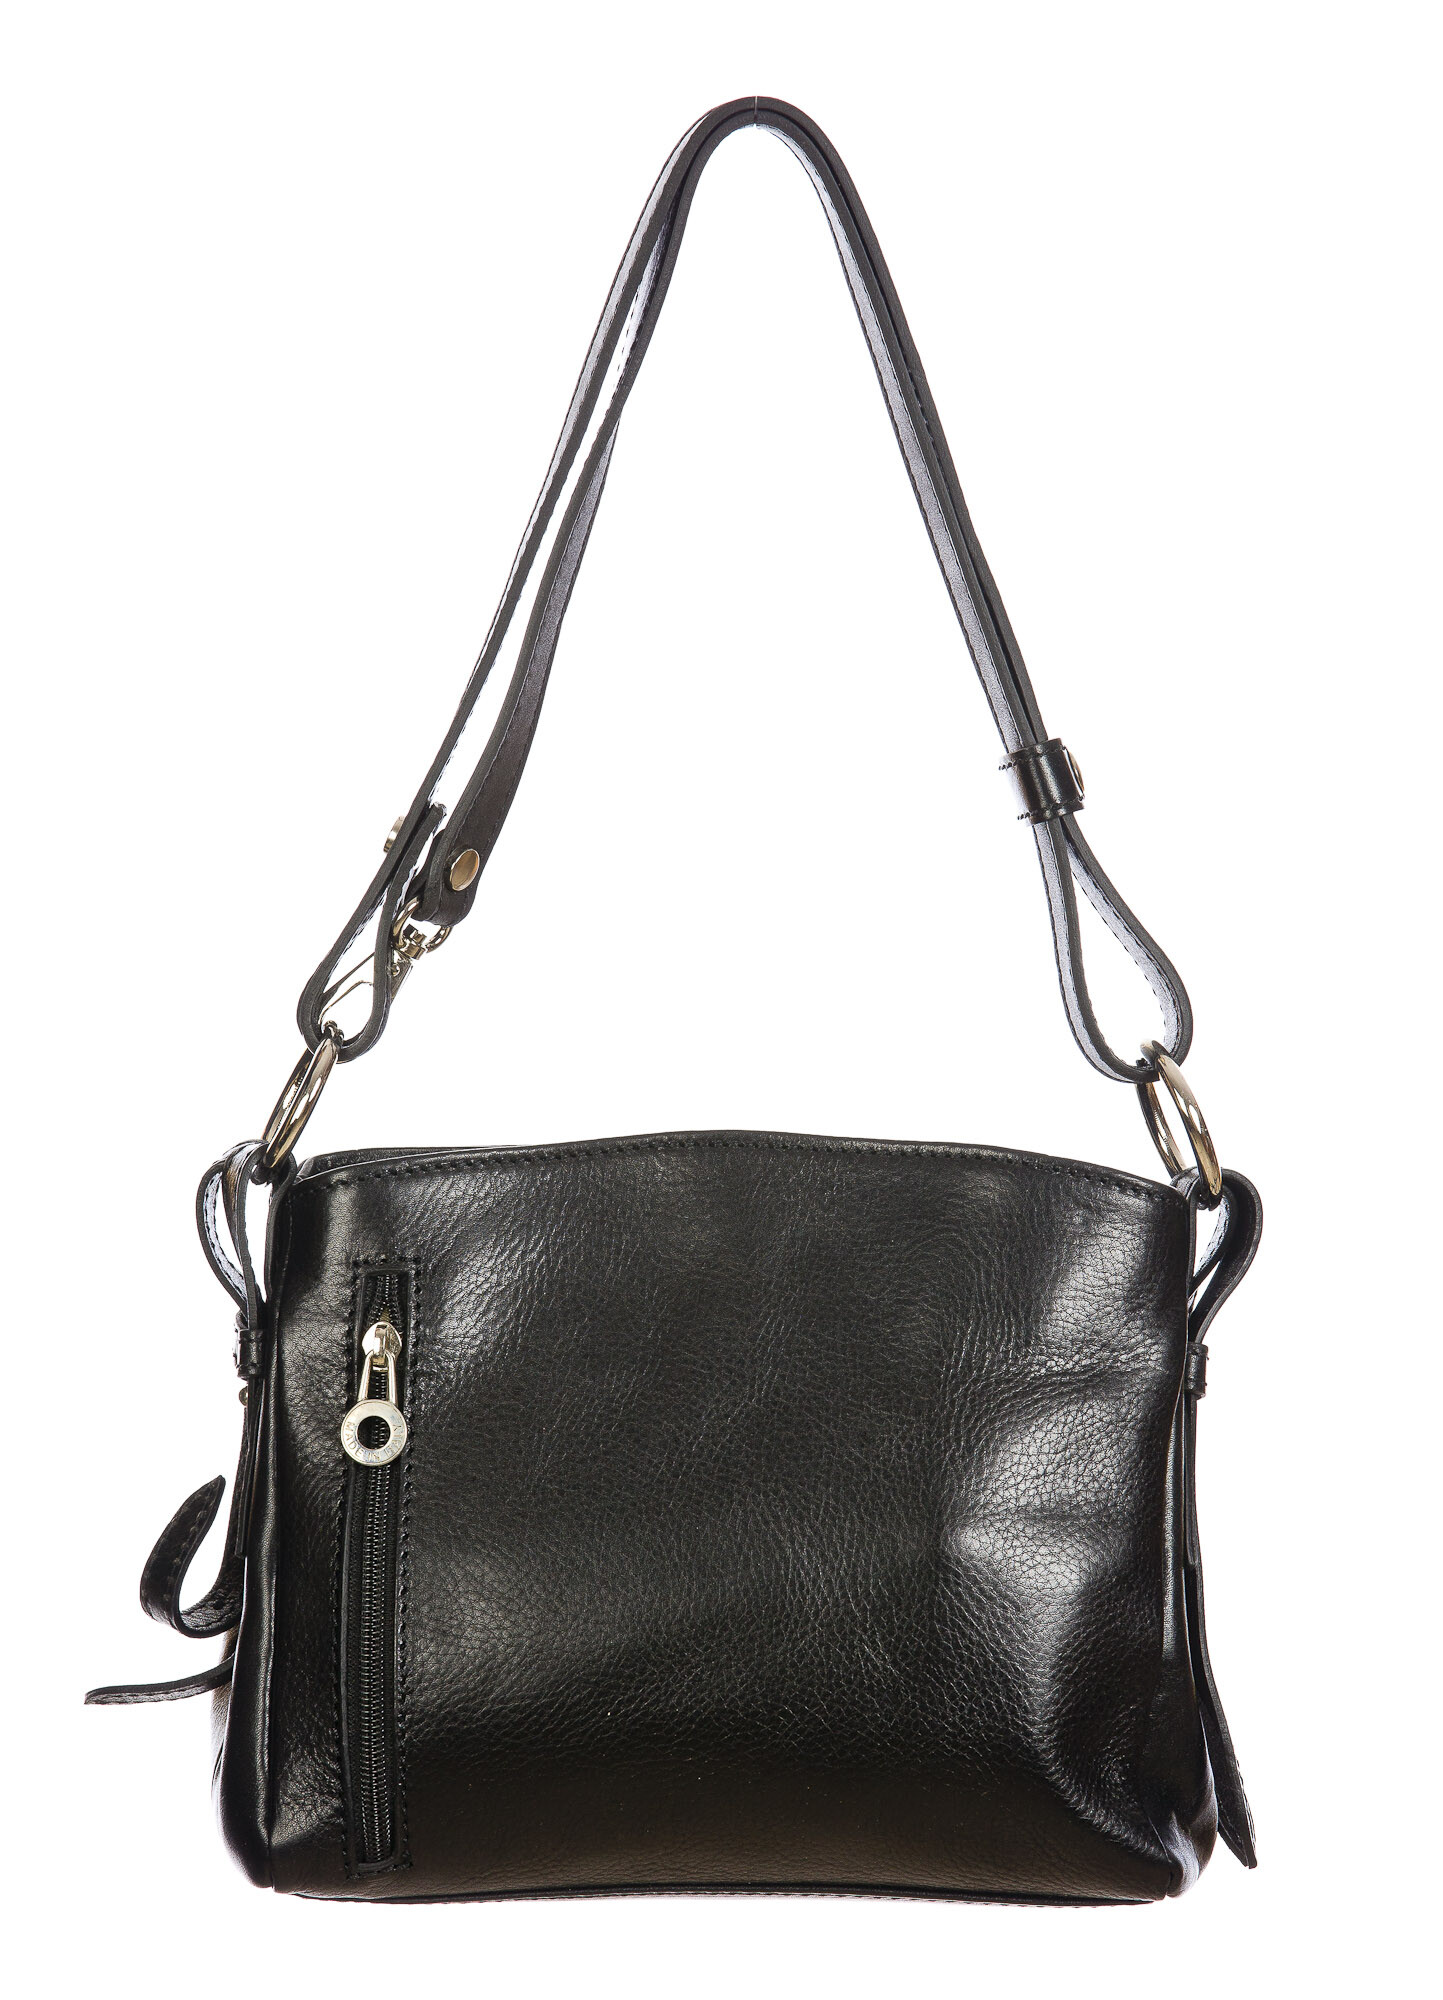 ORNELLA MINIi: ladies shoulder bag in buffered leather, color : BLACK ...